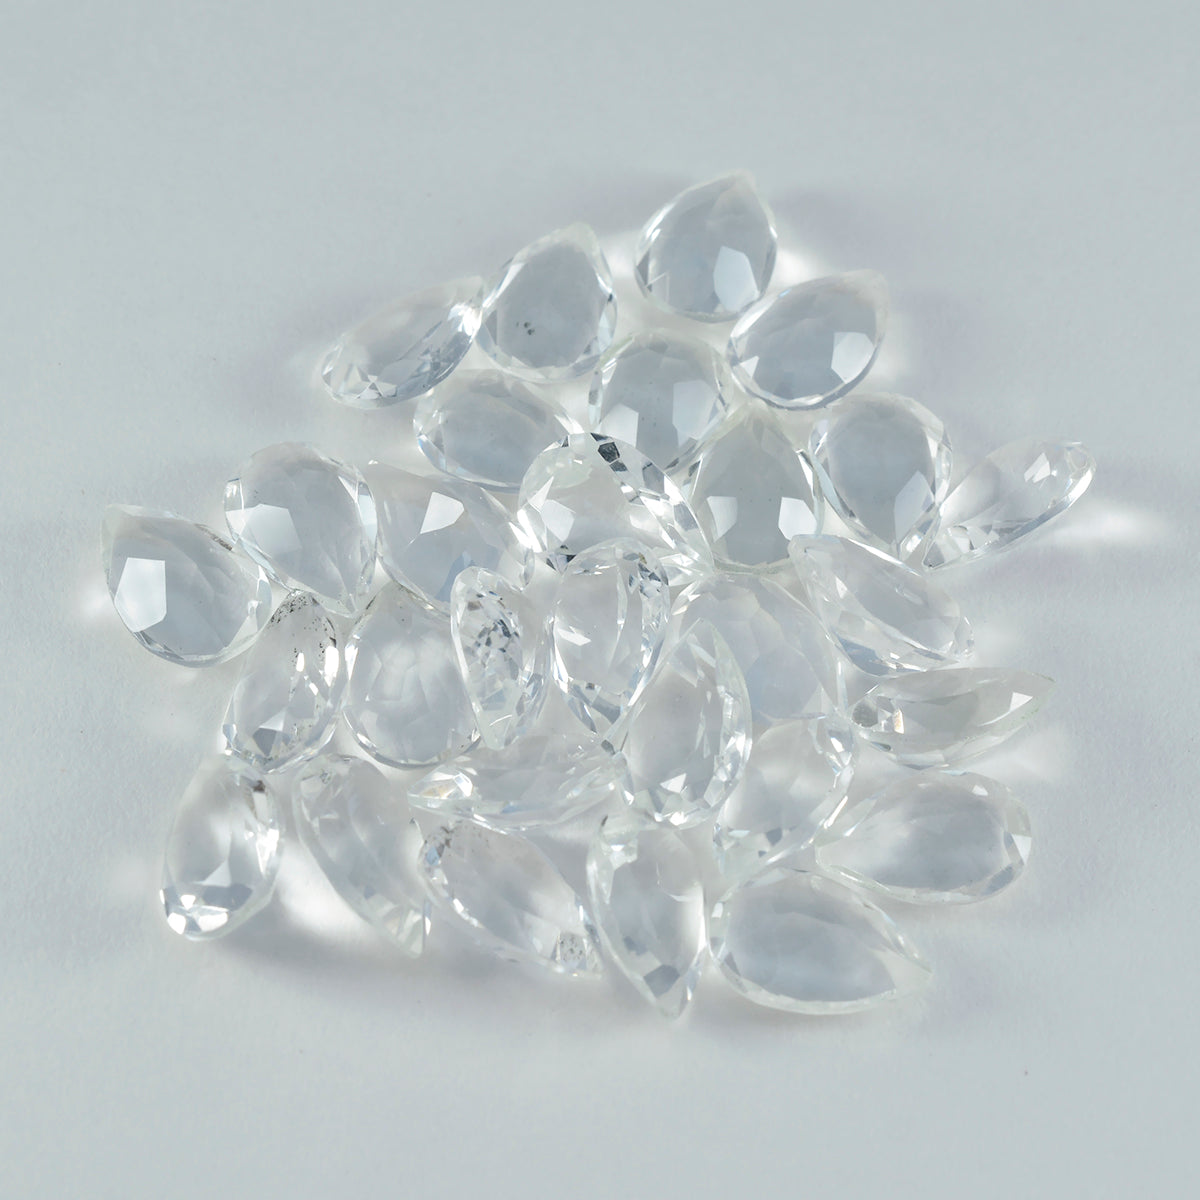 Riyogems 1PC Wit Kristal Kwarts Facet 6x9 mm Peervorm fantastische kwaliteitssteen